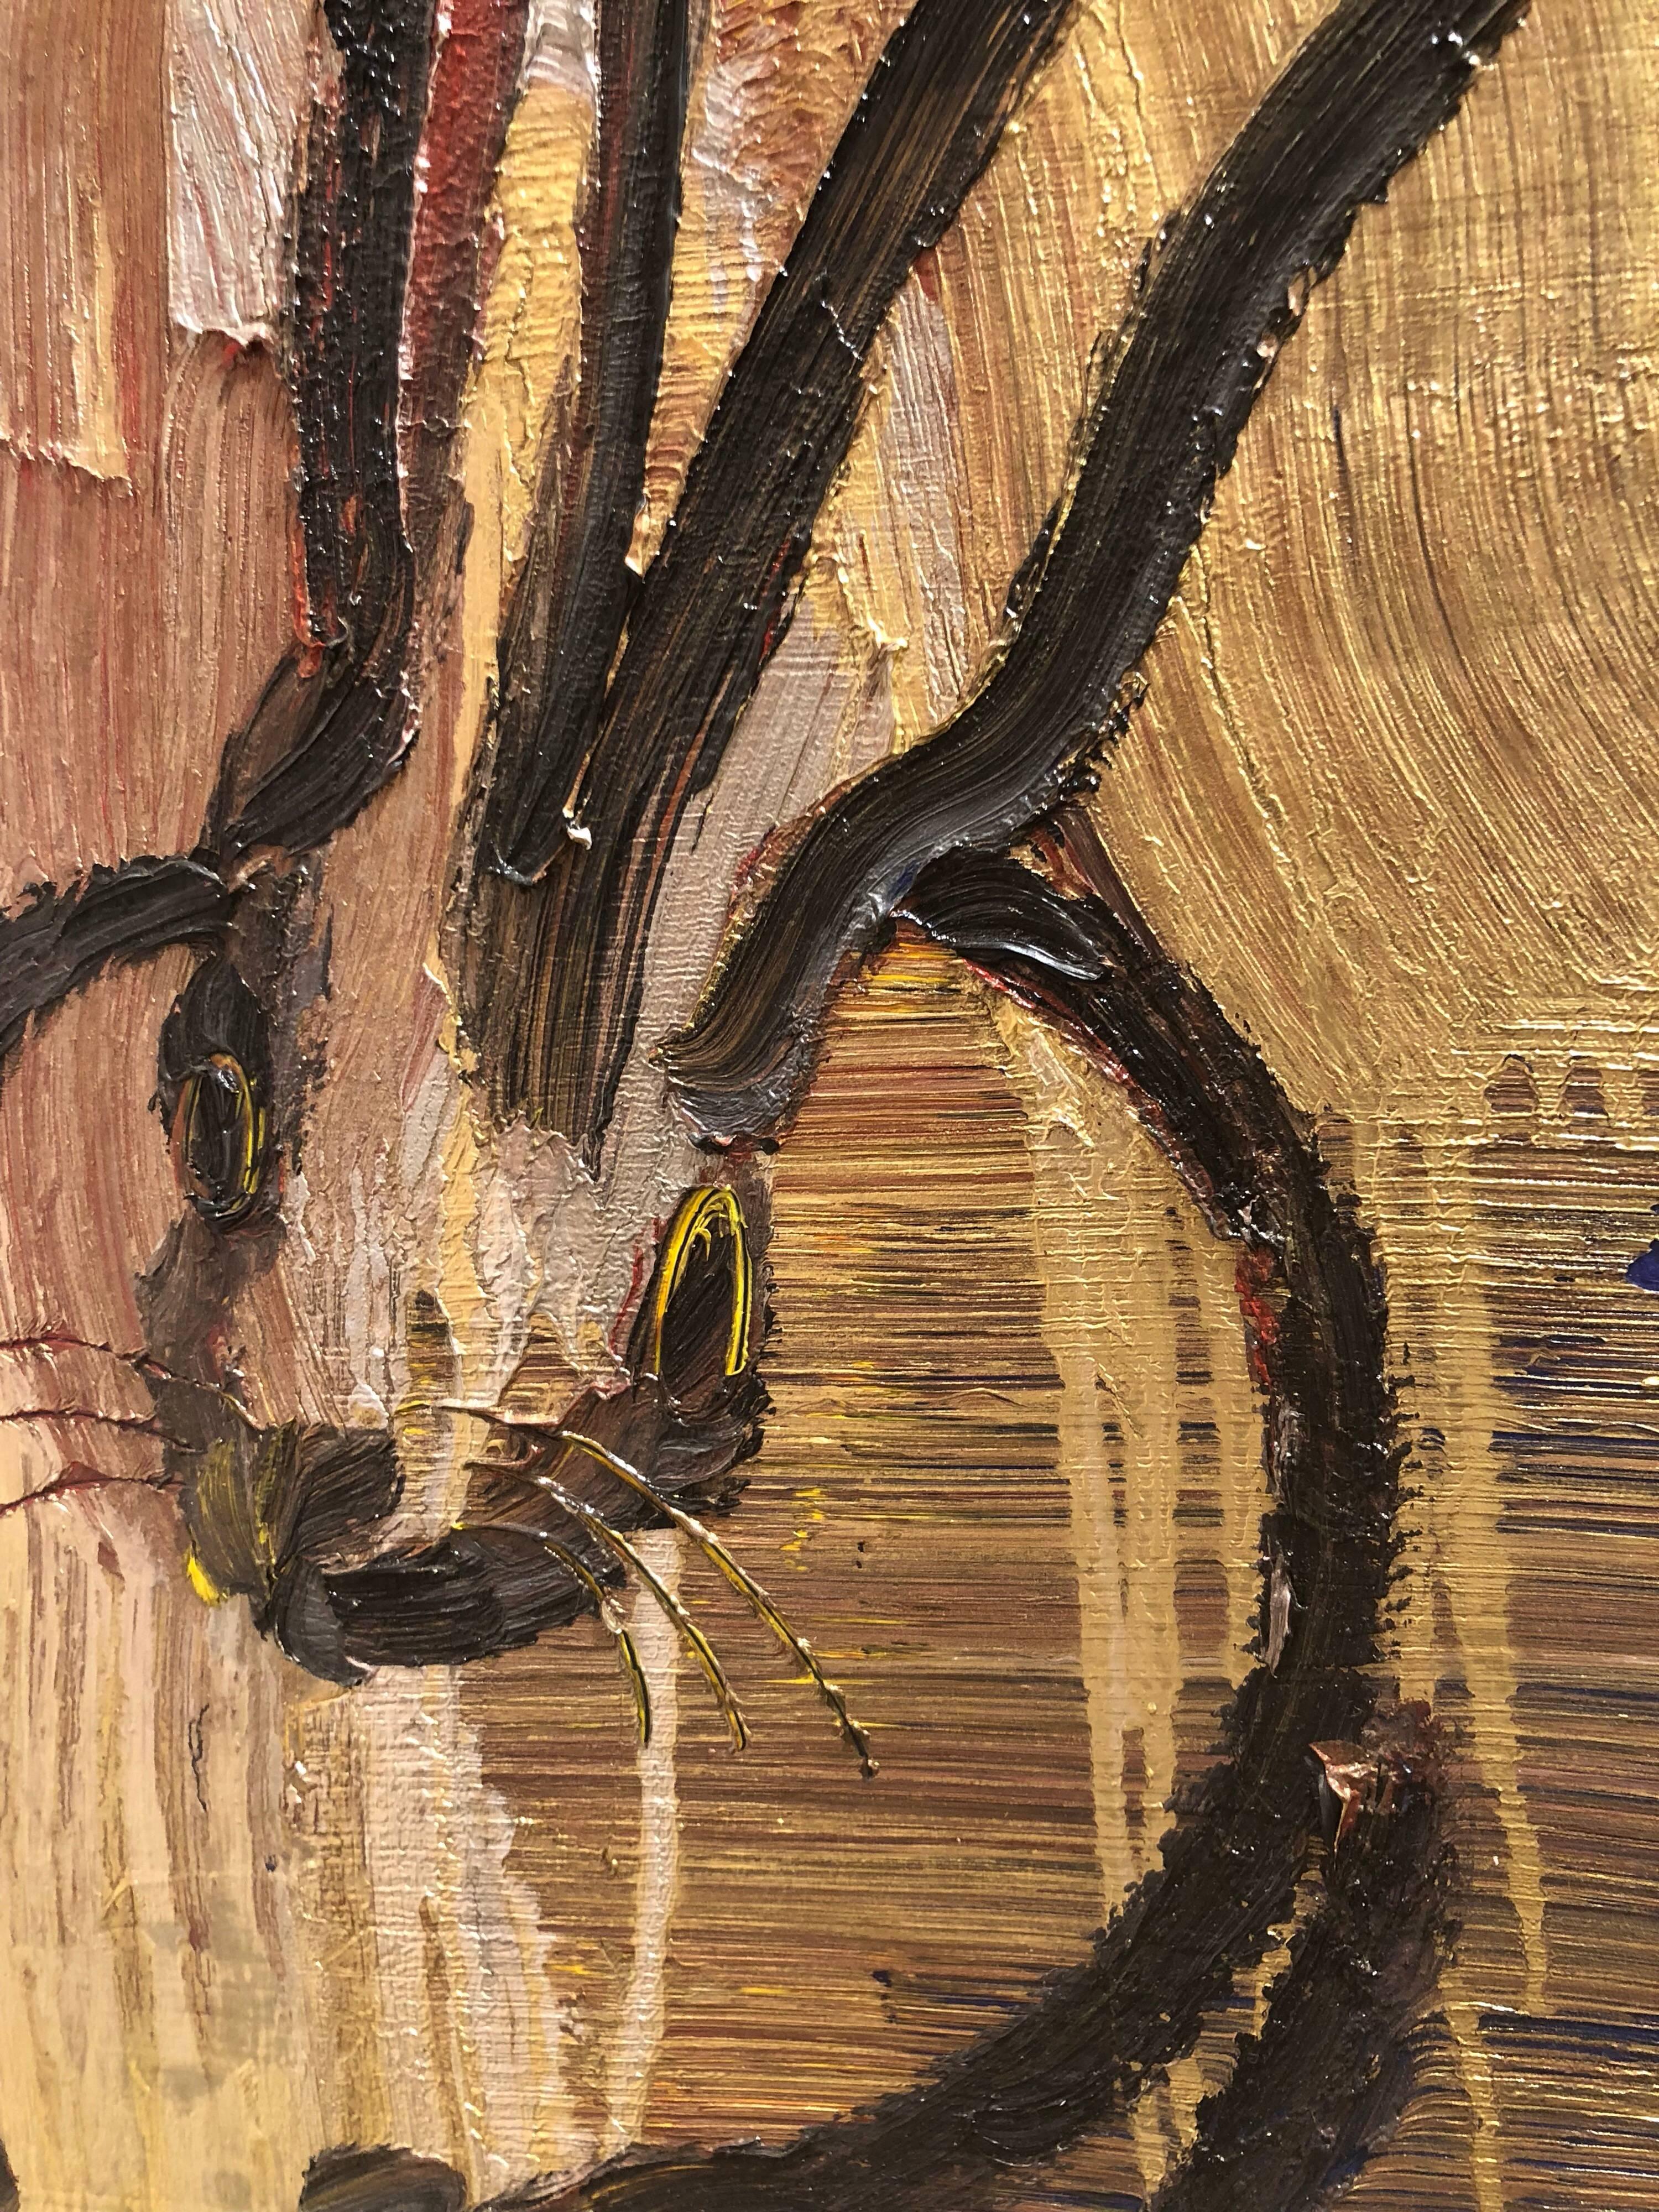 Artist:  Slonem, Hunt
Title:  Golden Bunny (Peter)
Series:  Bunnies
Date:  2016
Medium:  Oil on panel
Unframed Dimensions:  18